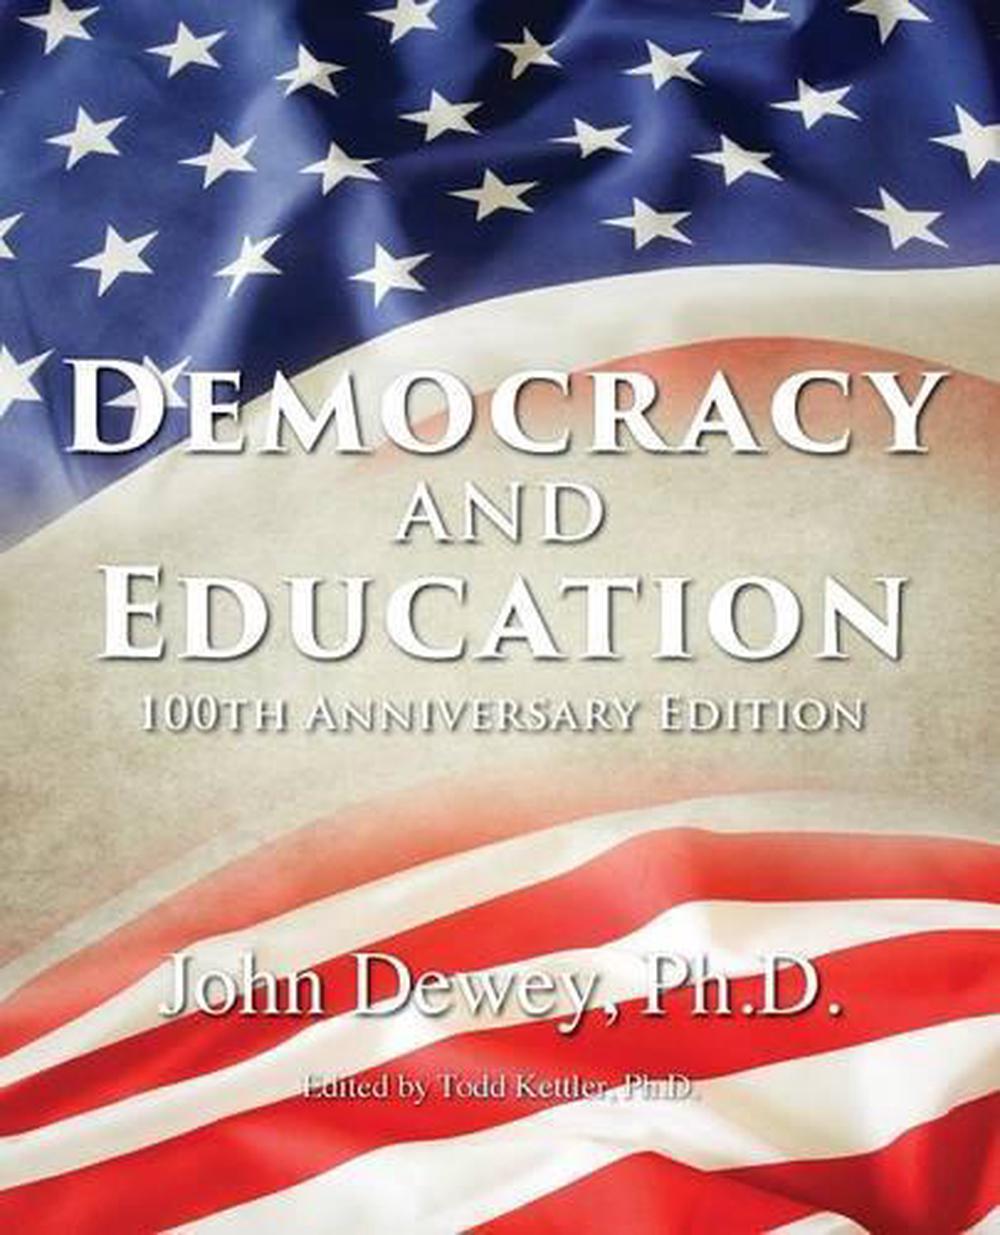 john dewey's book democracy and education